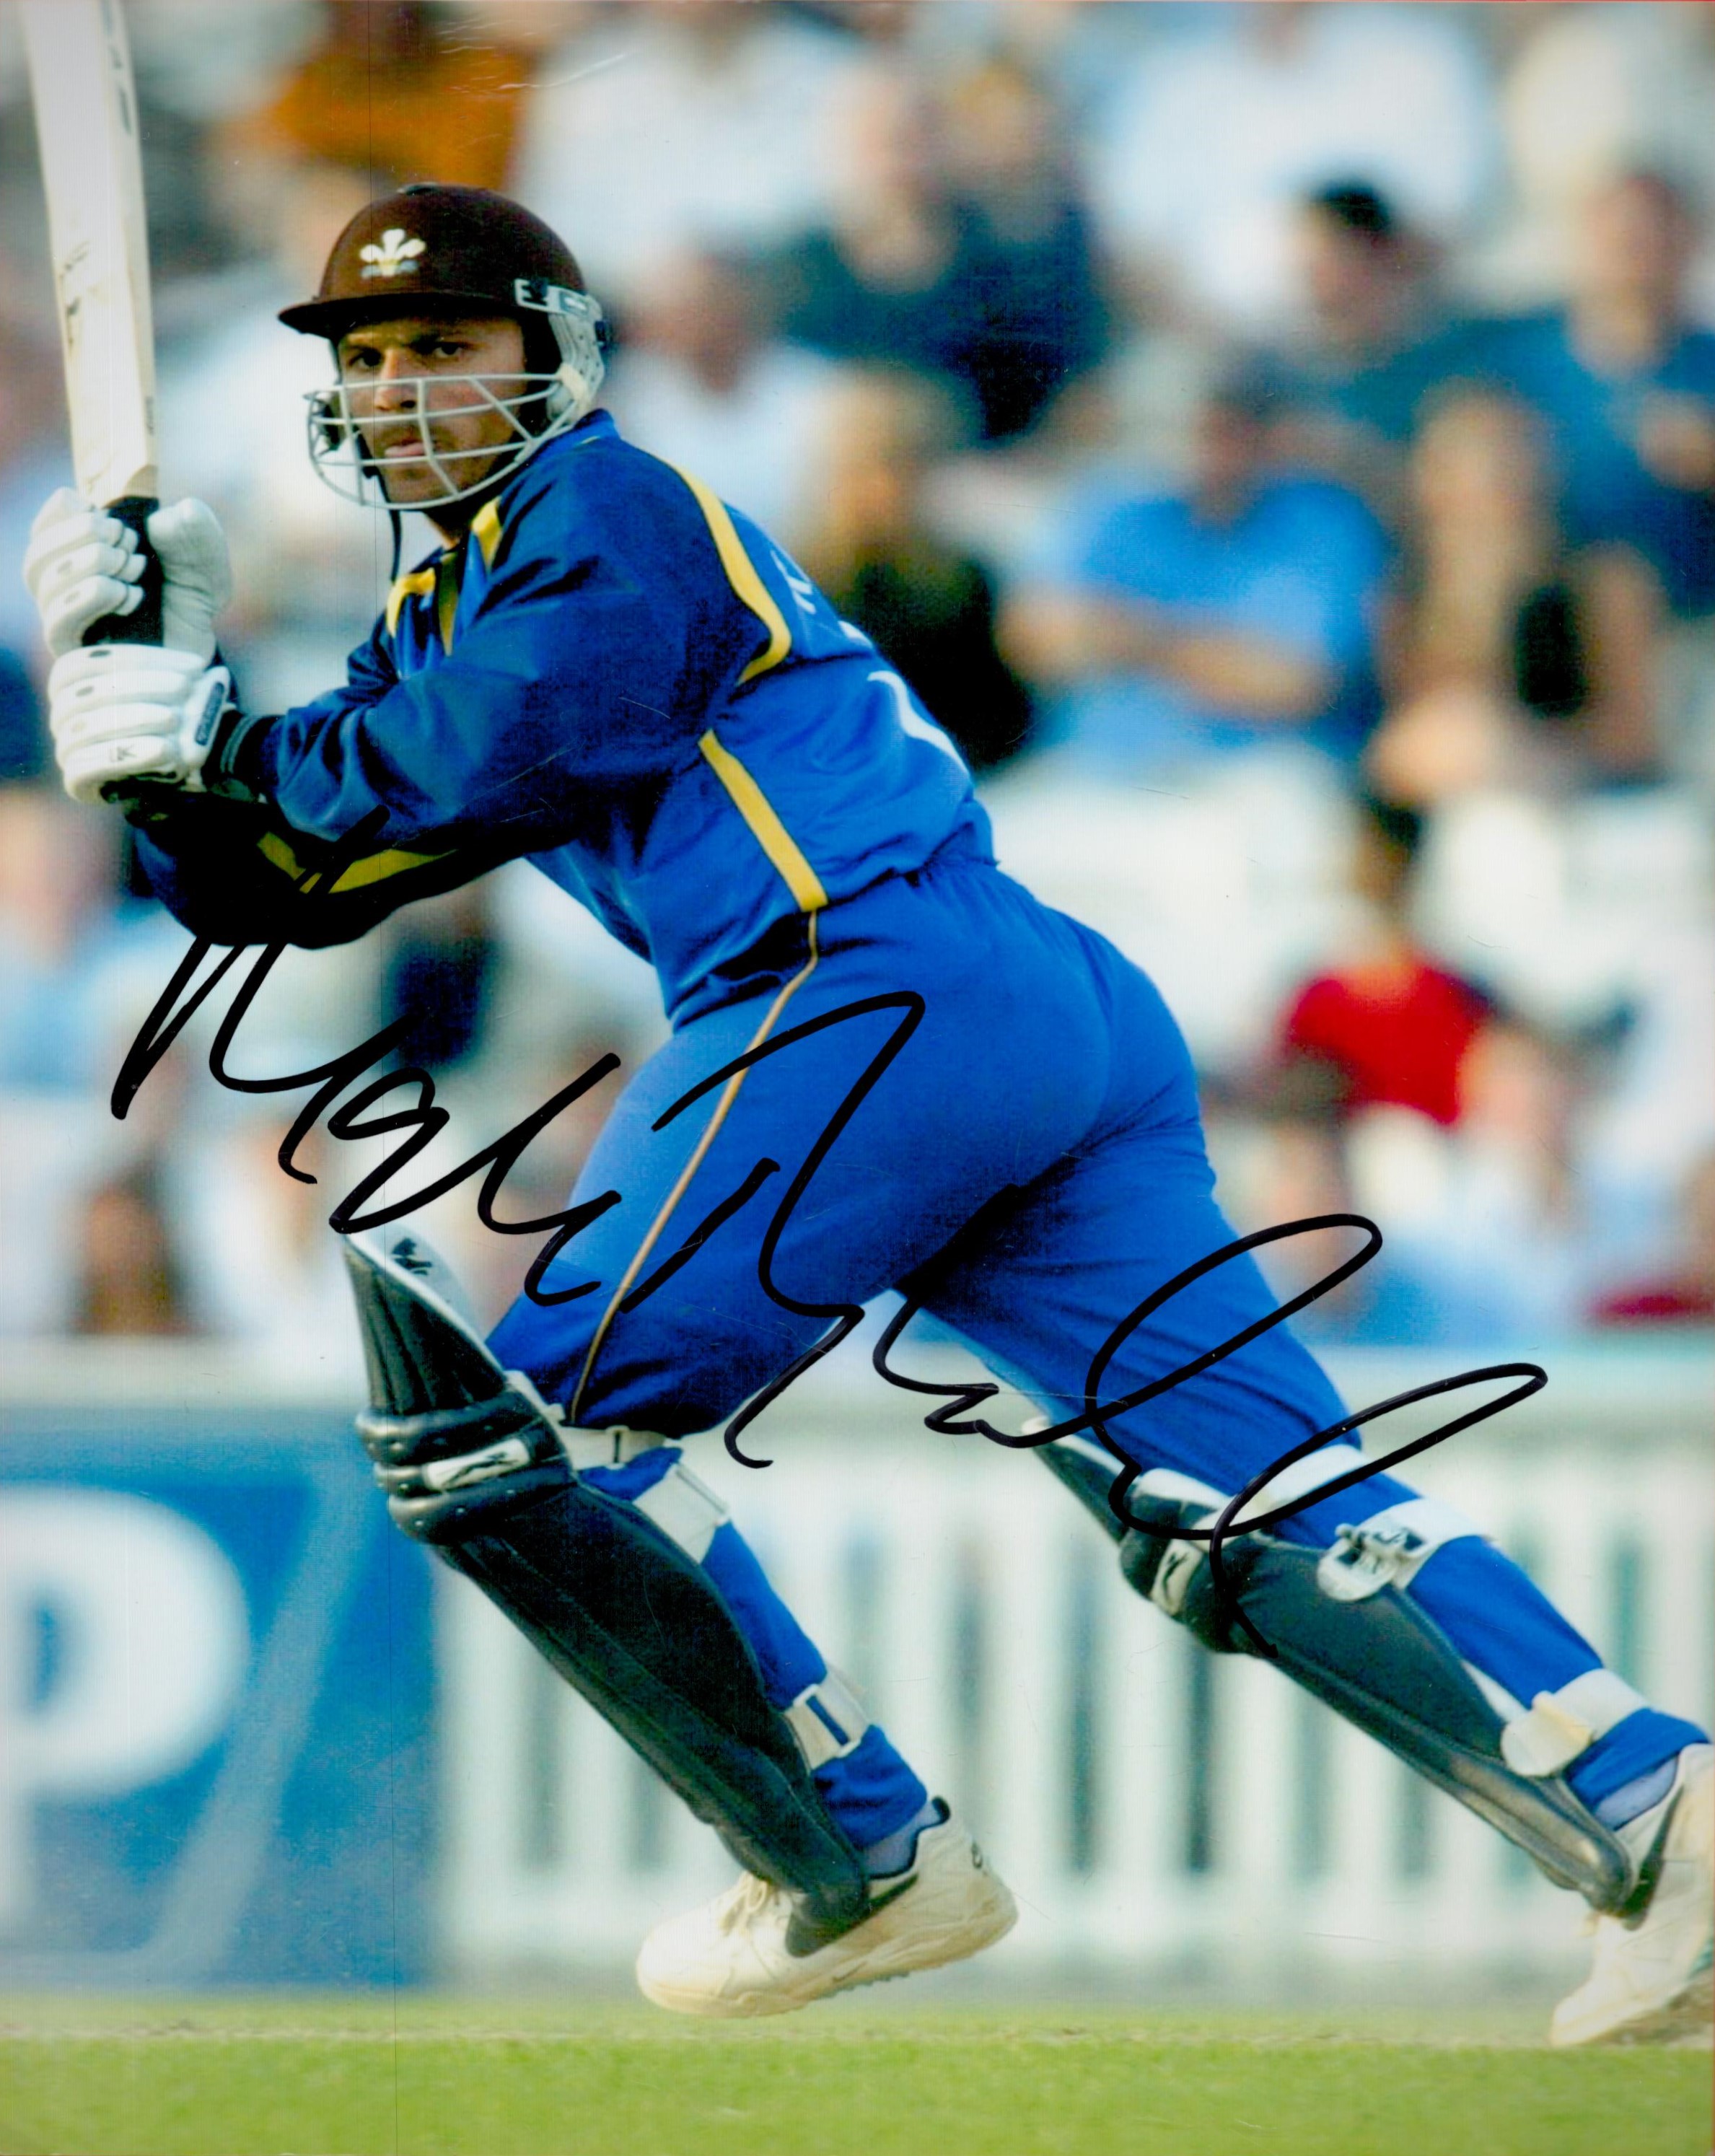 Former England Cricket Star Mark Ramprakash Signed 10x8 inch Colour Photo. Good condition. All